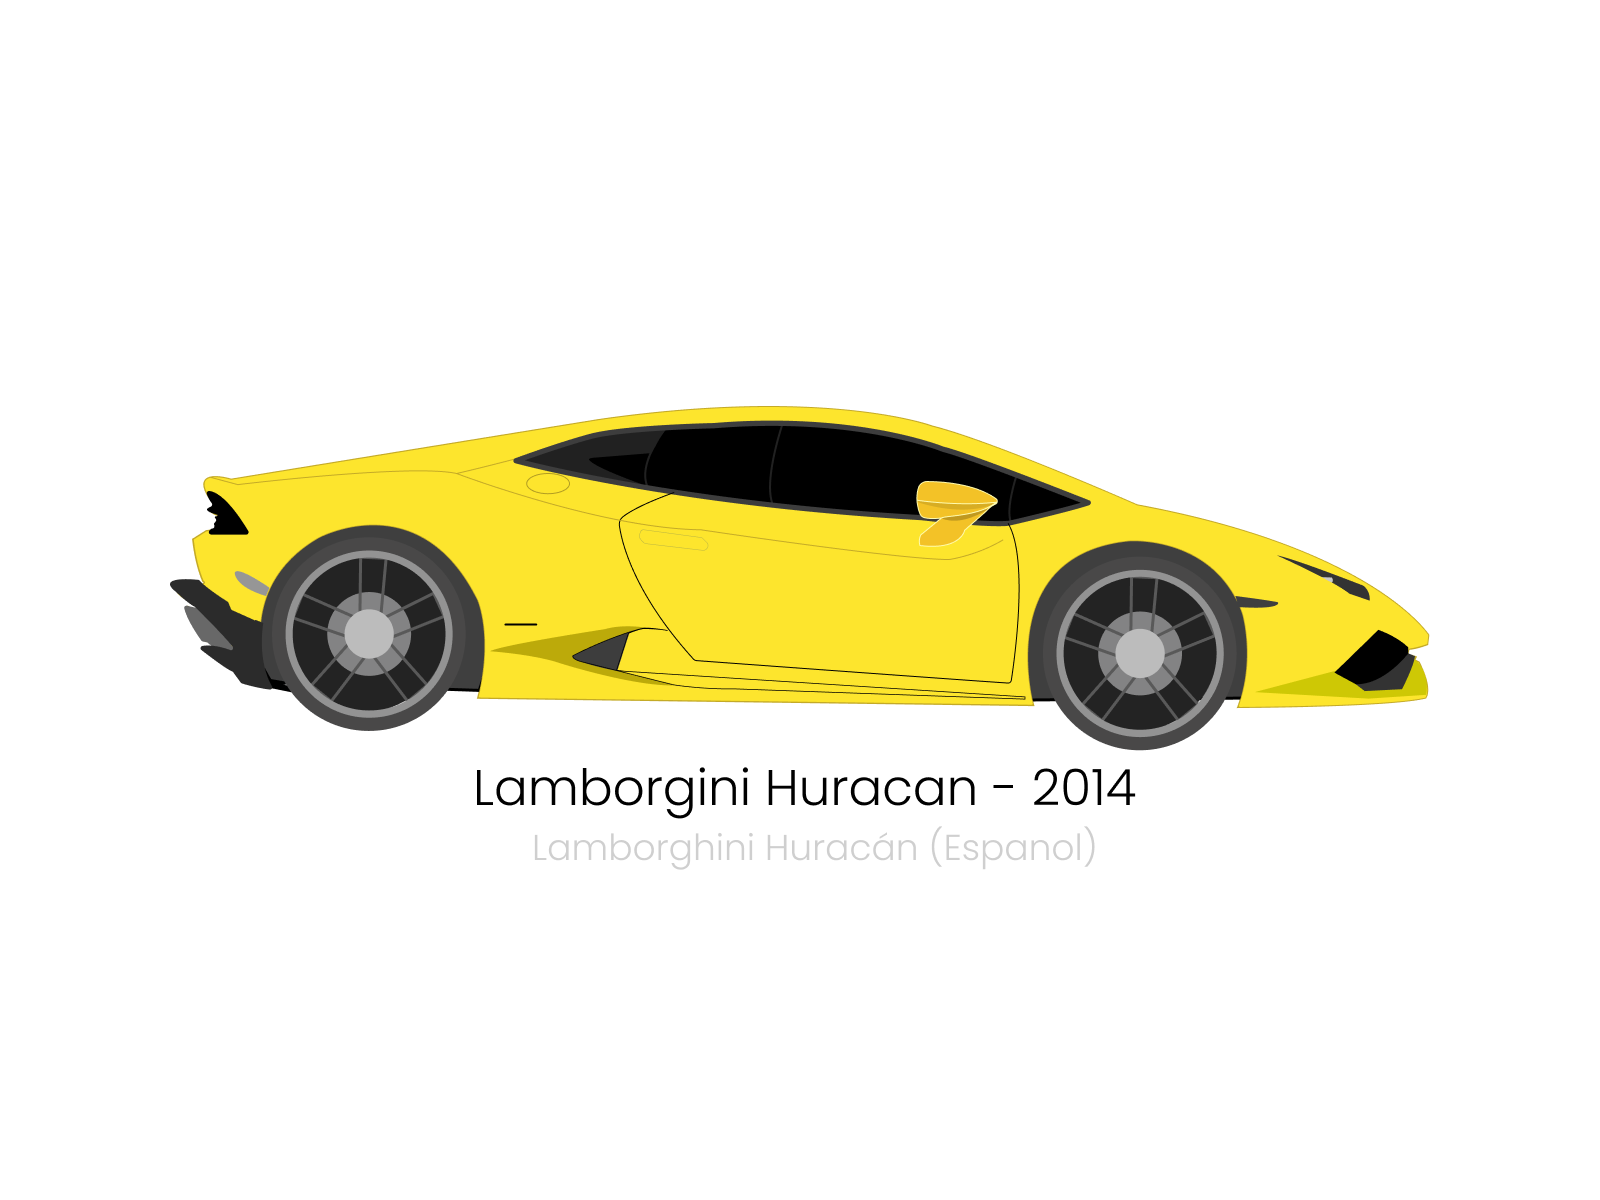 Lamborghini Huracan - 2014 illustration by Matija Bogdanovic on Dribbble